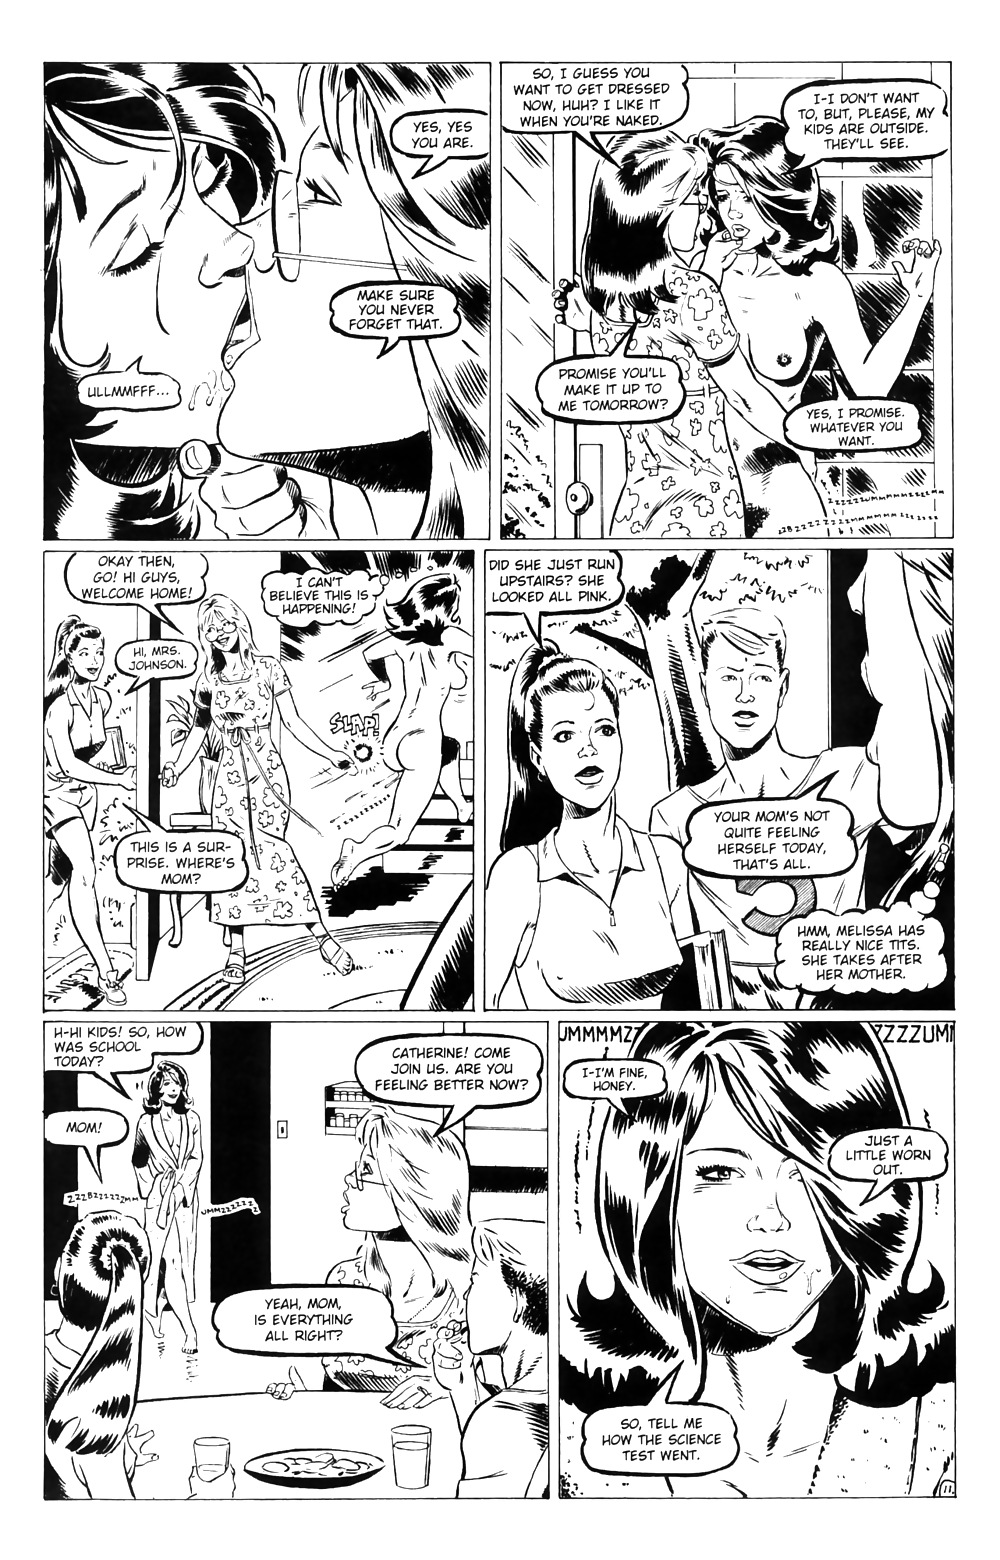 Hausfrauen Am Spiel # 01 - Eros-Comics Von Rebecca - April 2002 #36196521